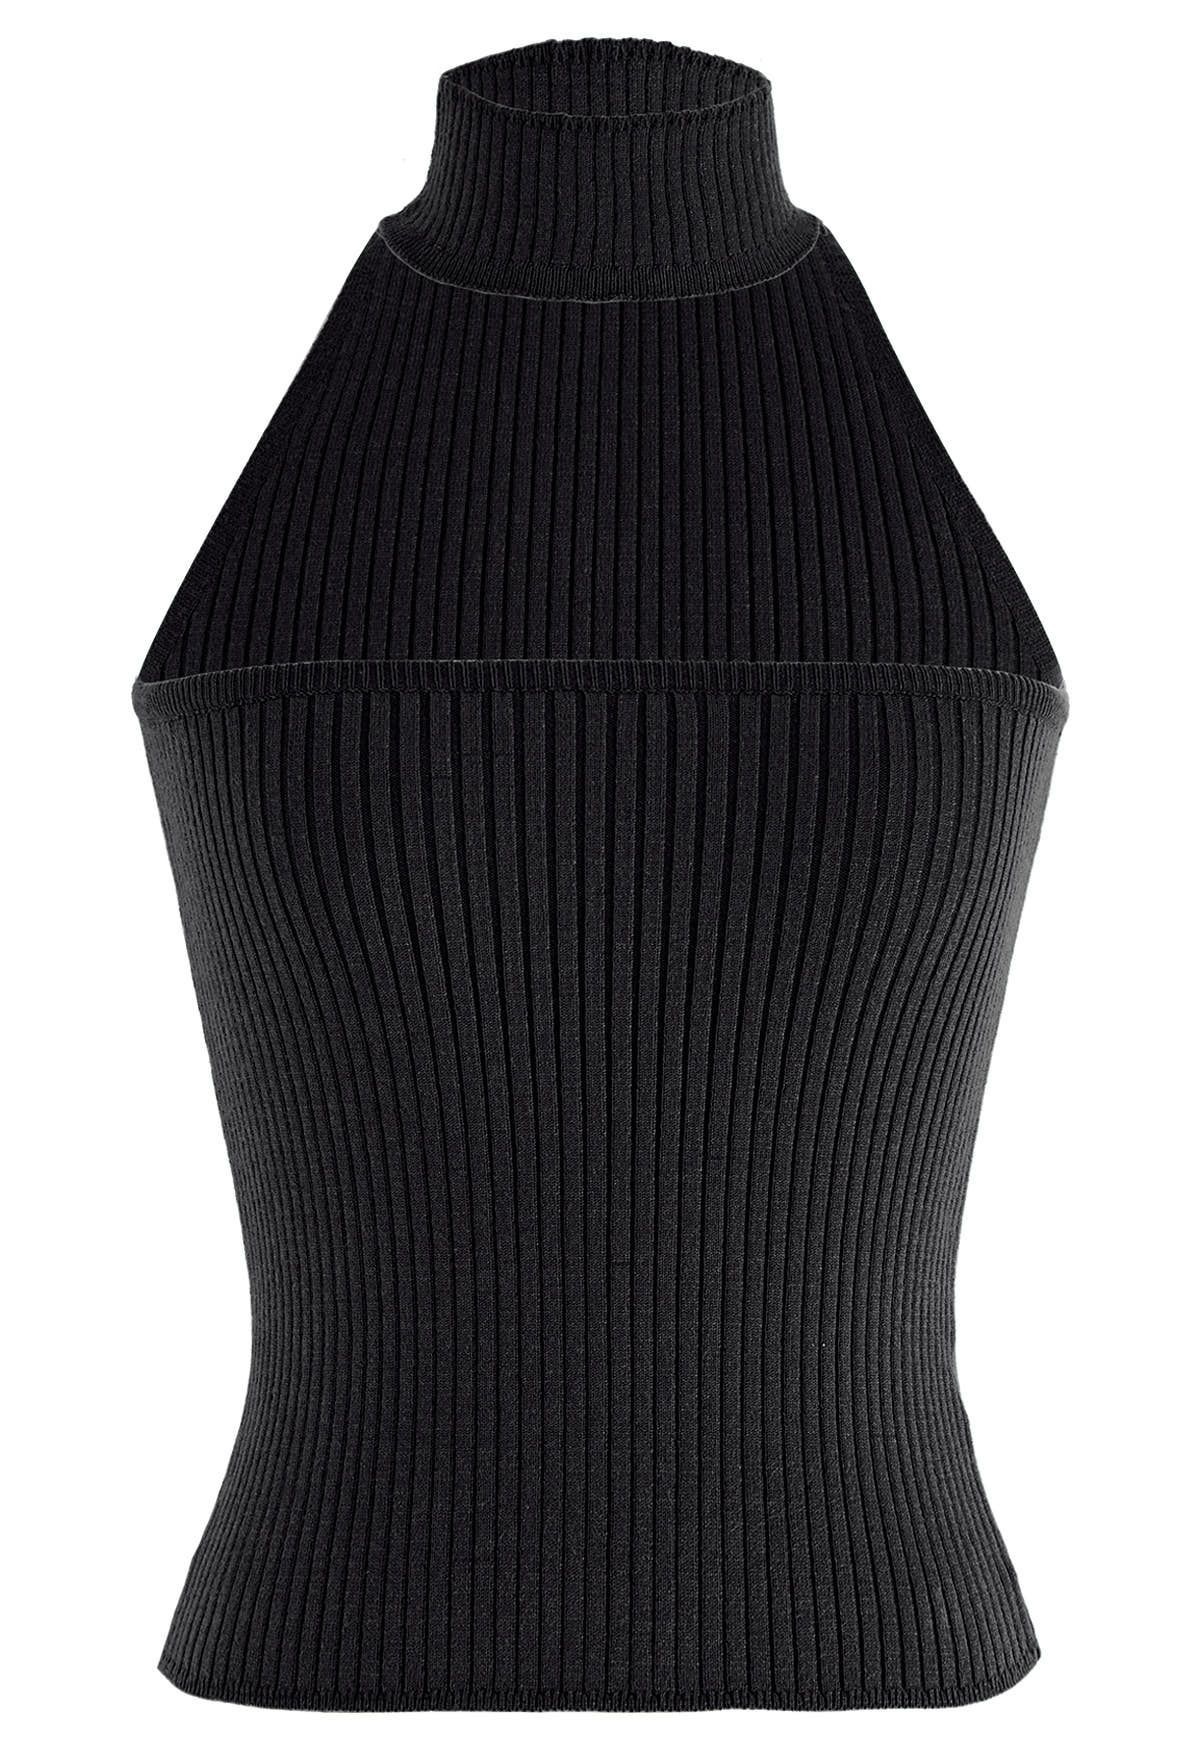 Strapless Halter Neck Knit Top in Black | Chicwish